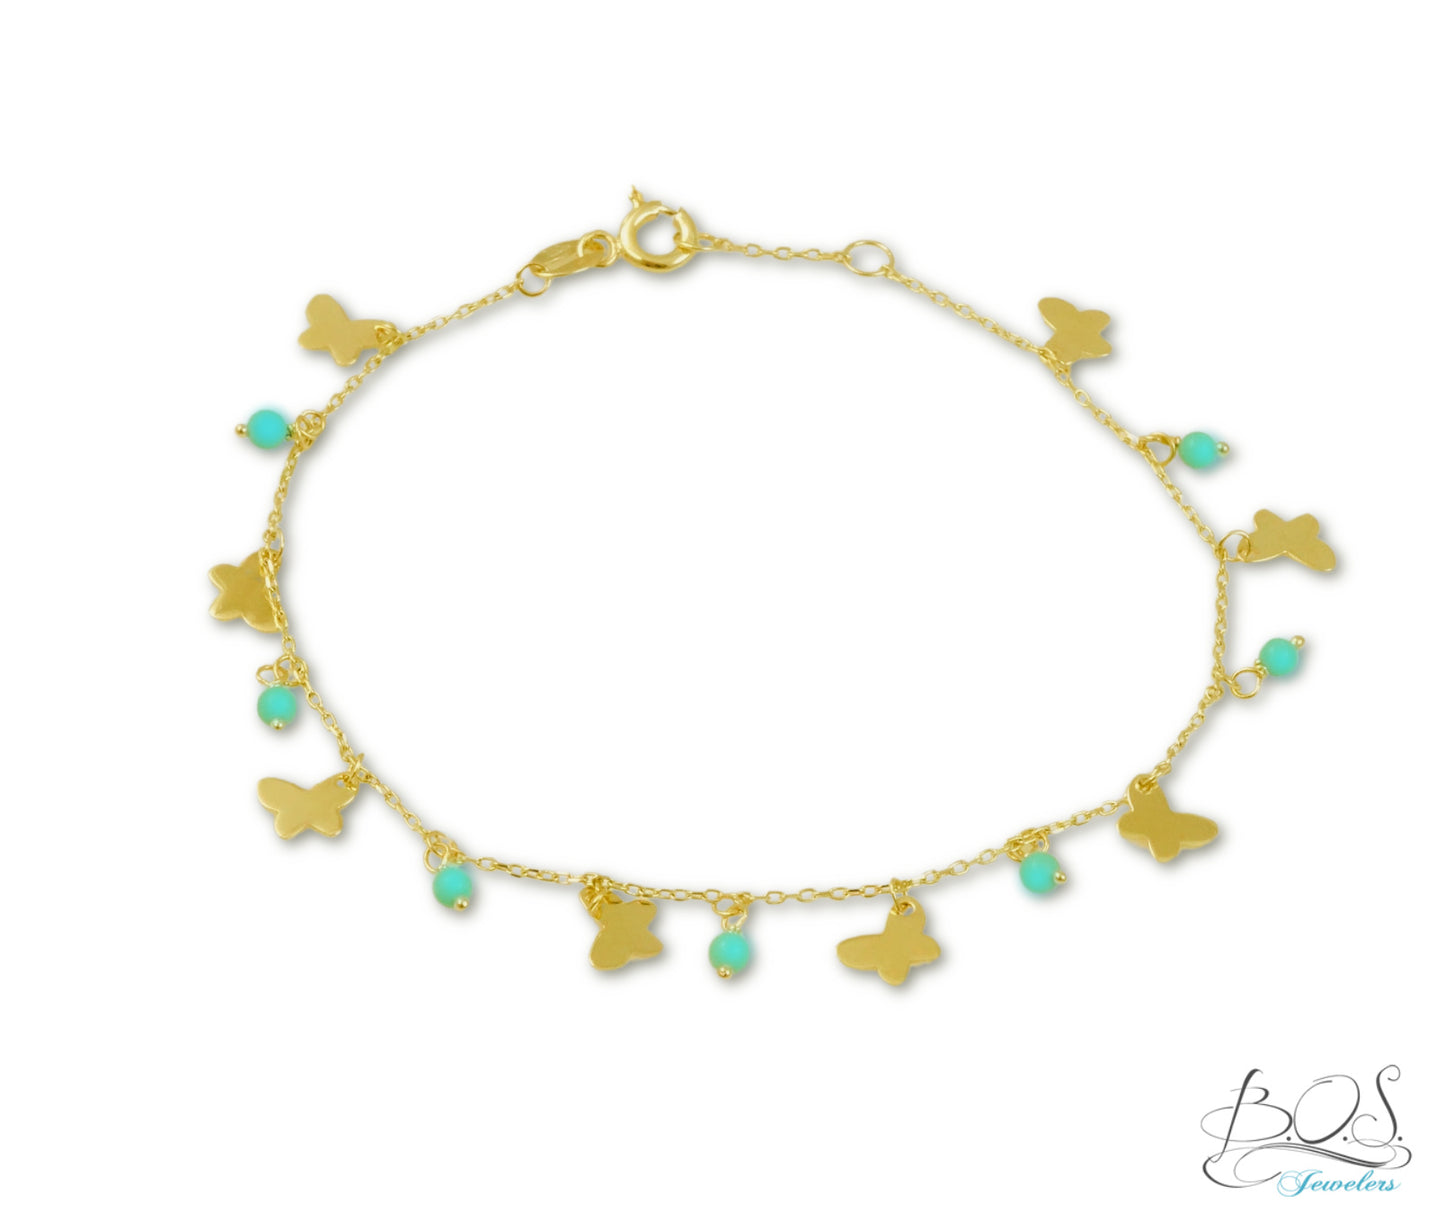 Dangling Butterflies & Pearls or Turquoise Bracelet